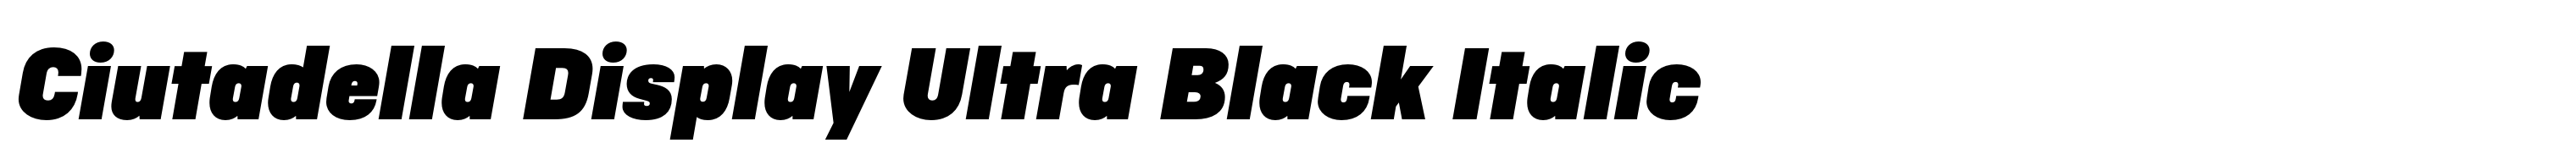 Ciutadella Display Ultra Black Italic